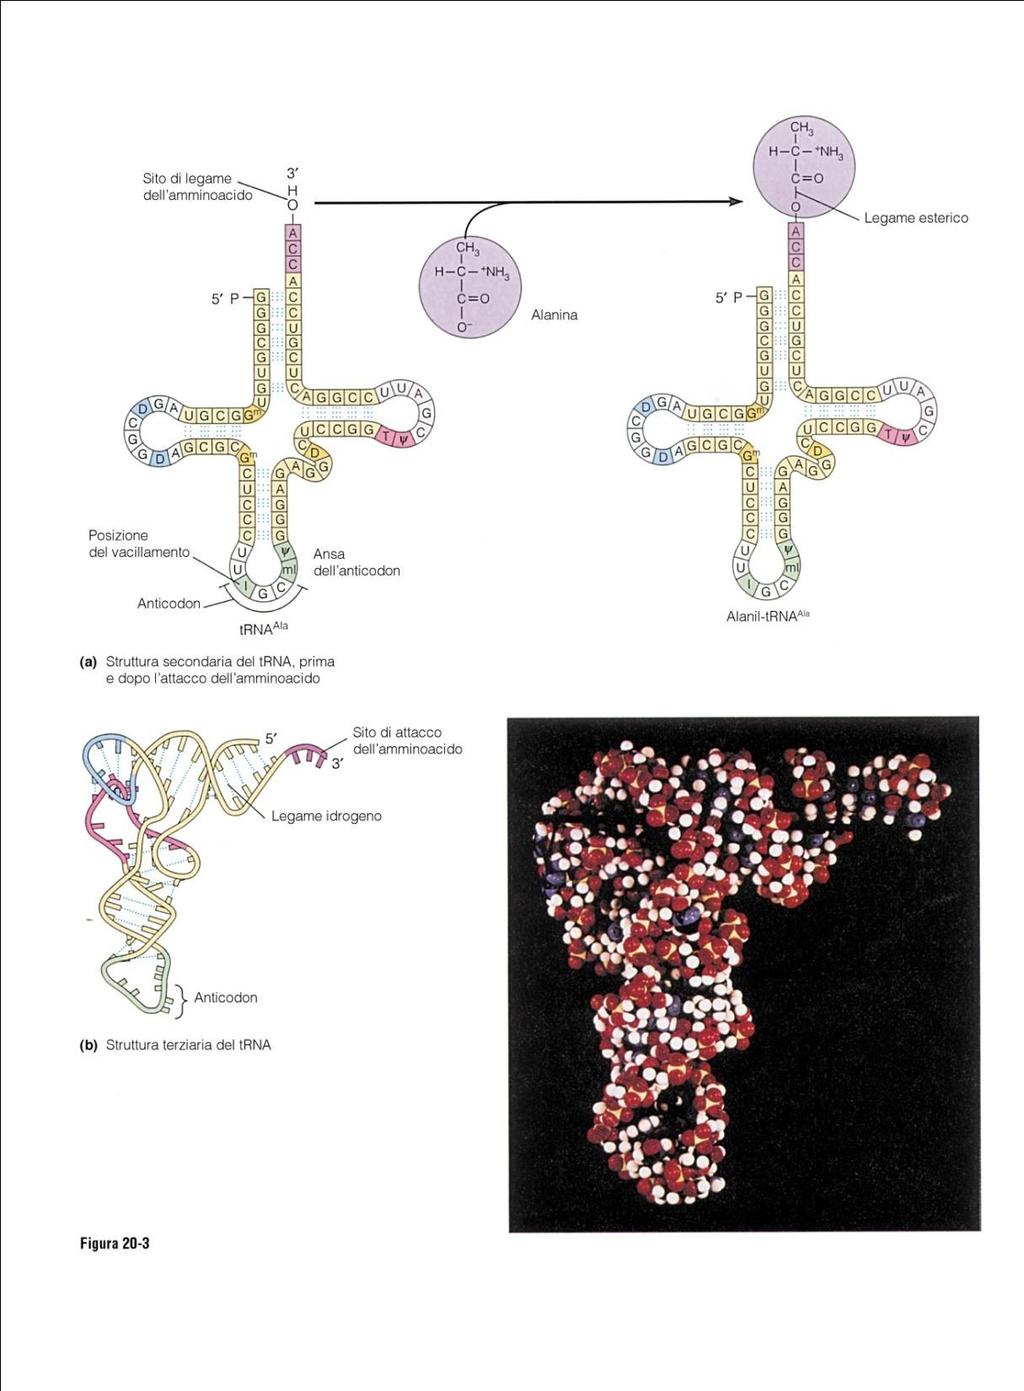 trna: RNA transfert mediano il trasferimento